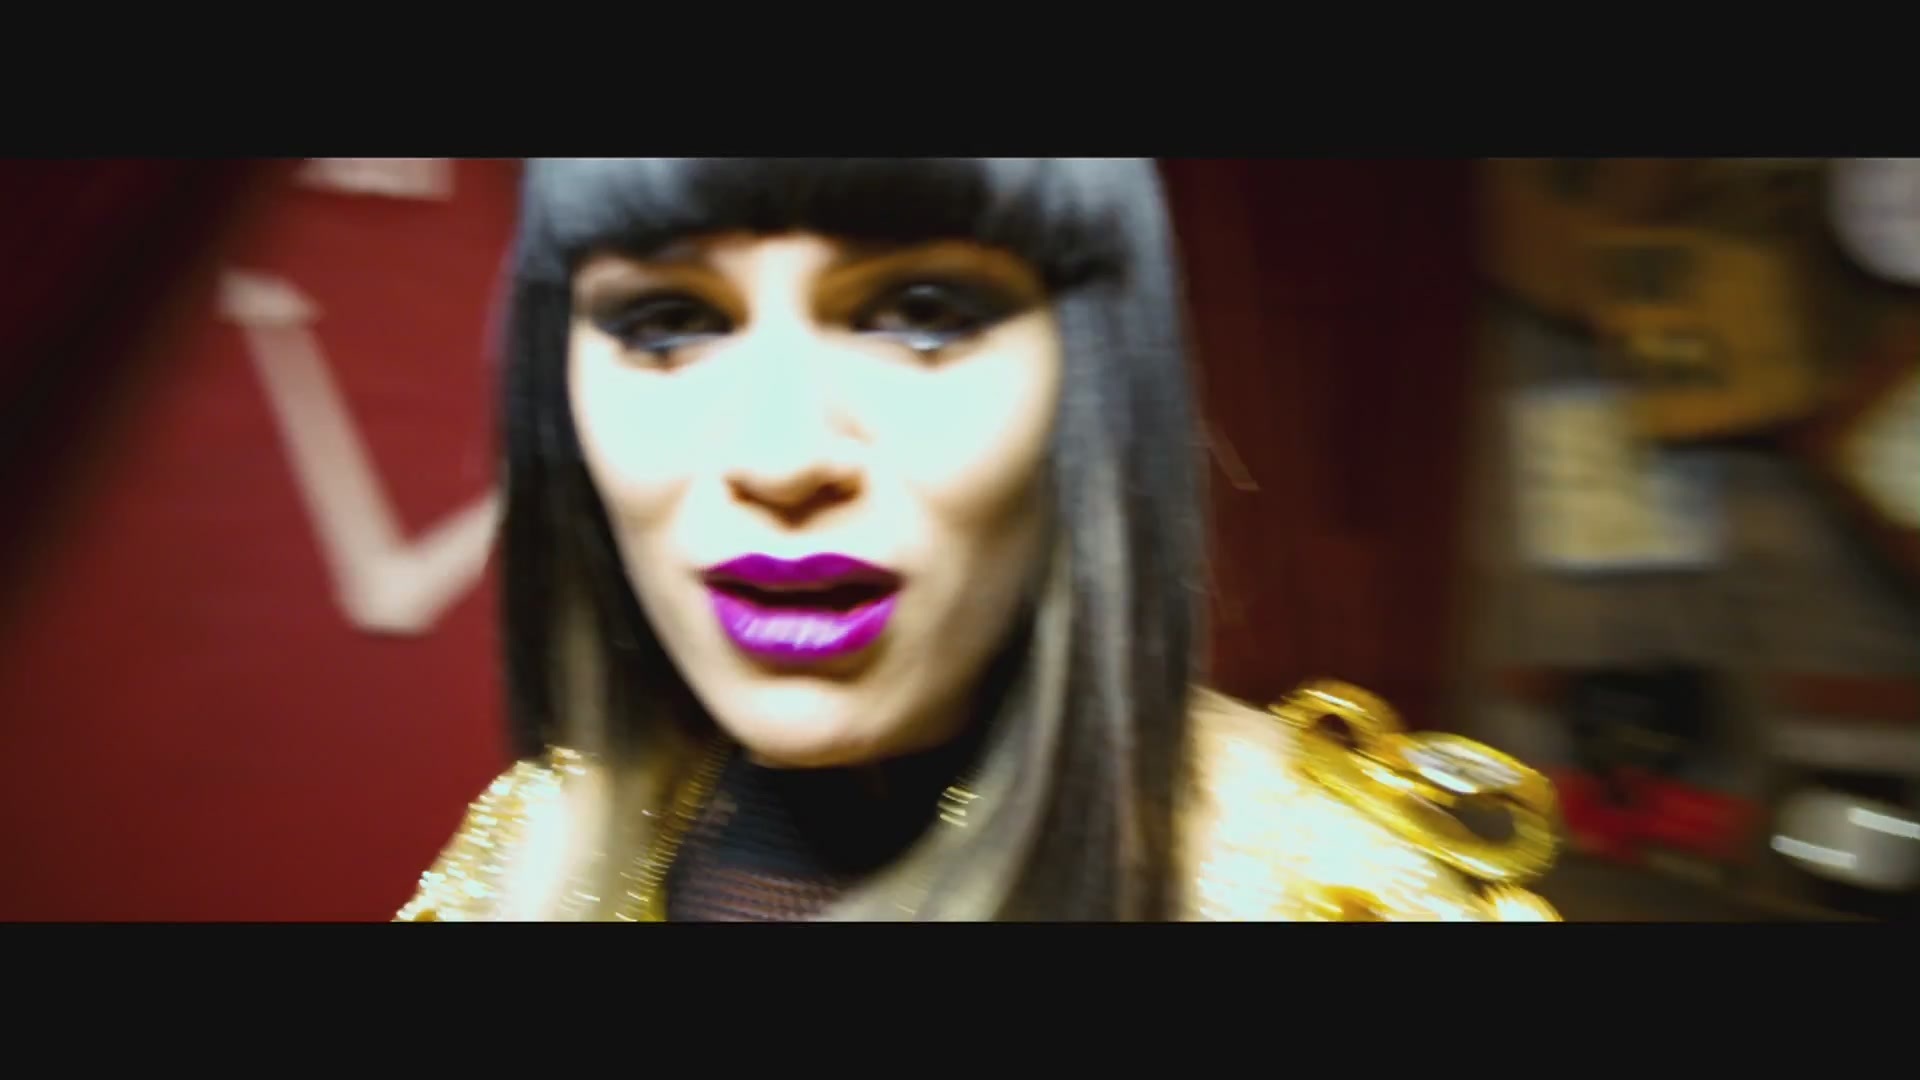 Nobody's Perfect [Music Video] - Jessie J Image (21700147) - Fanpop1920 x 1080